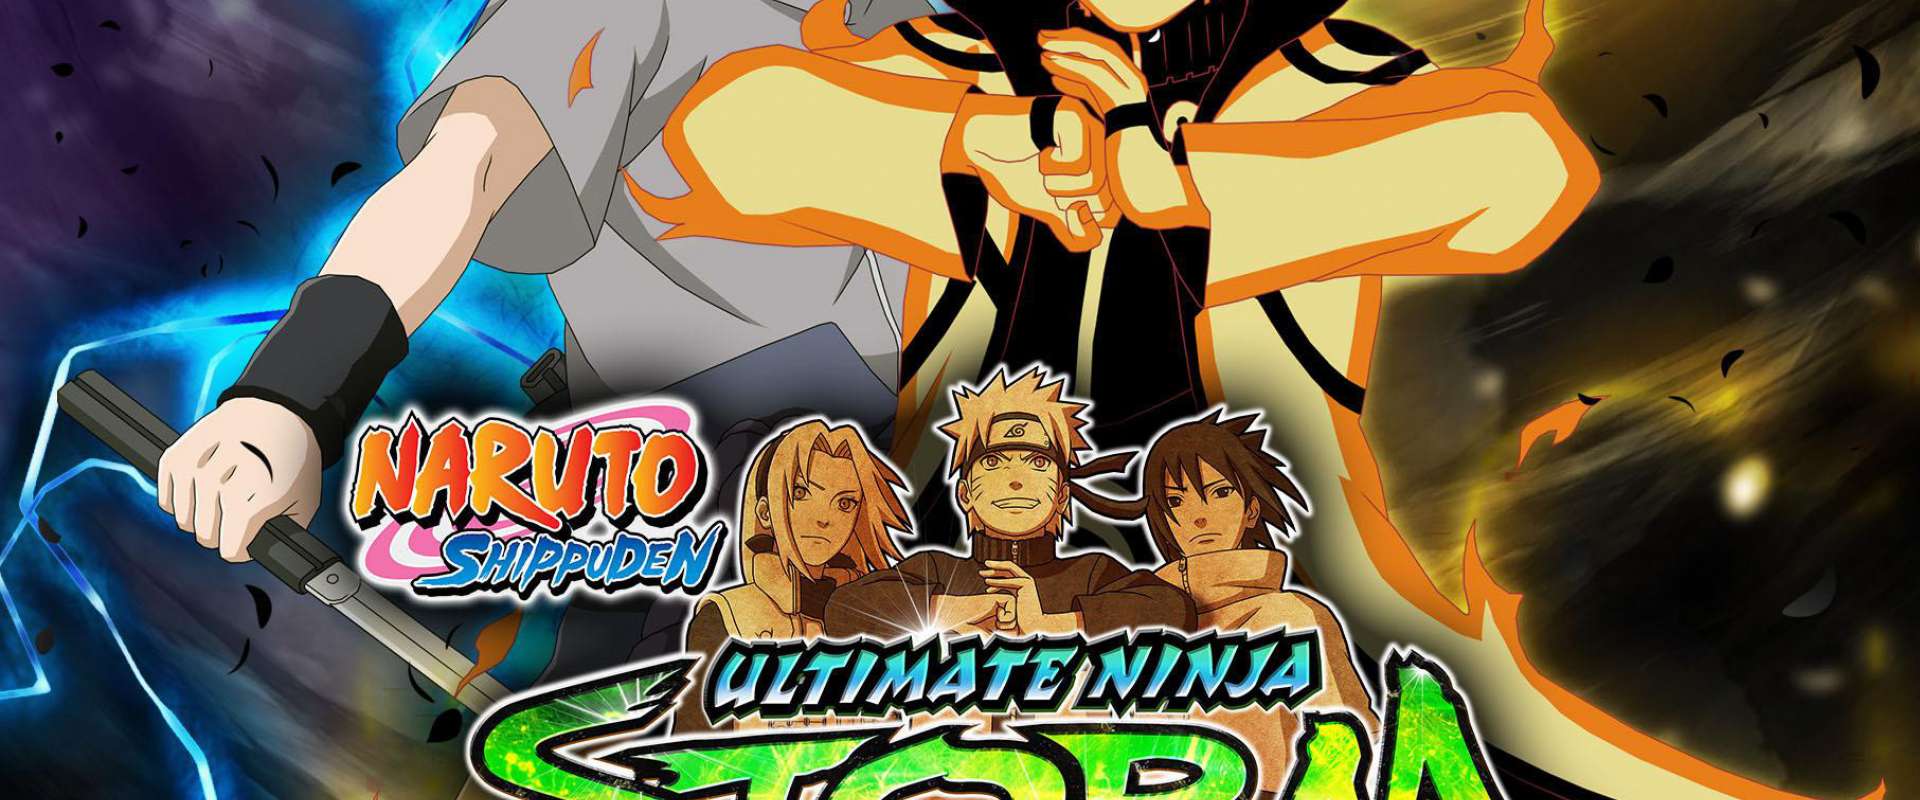 Naruto Shippuden: Ultimate Ninja v1.0 for PS